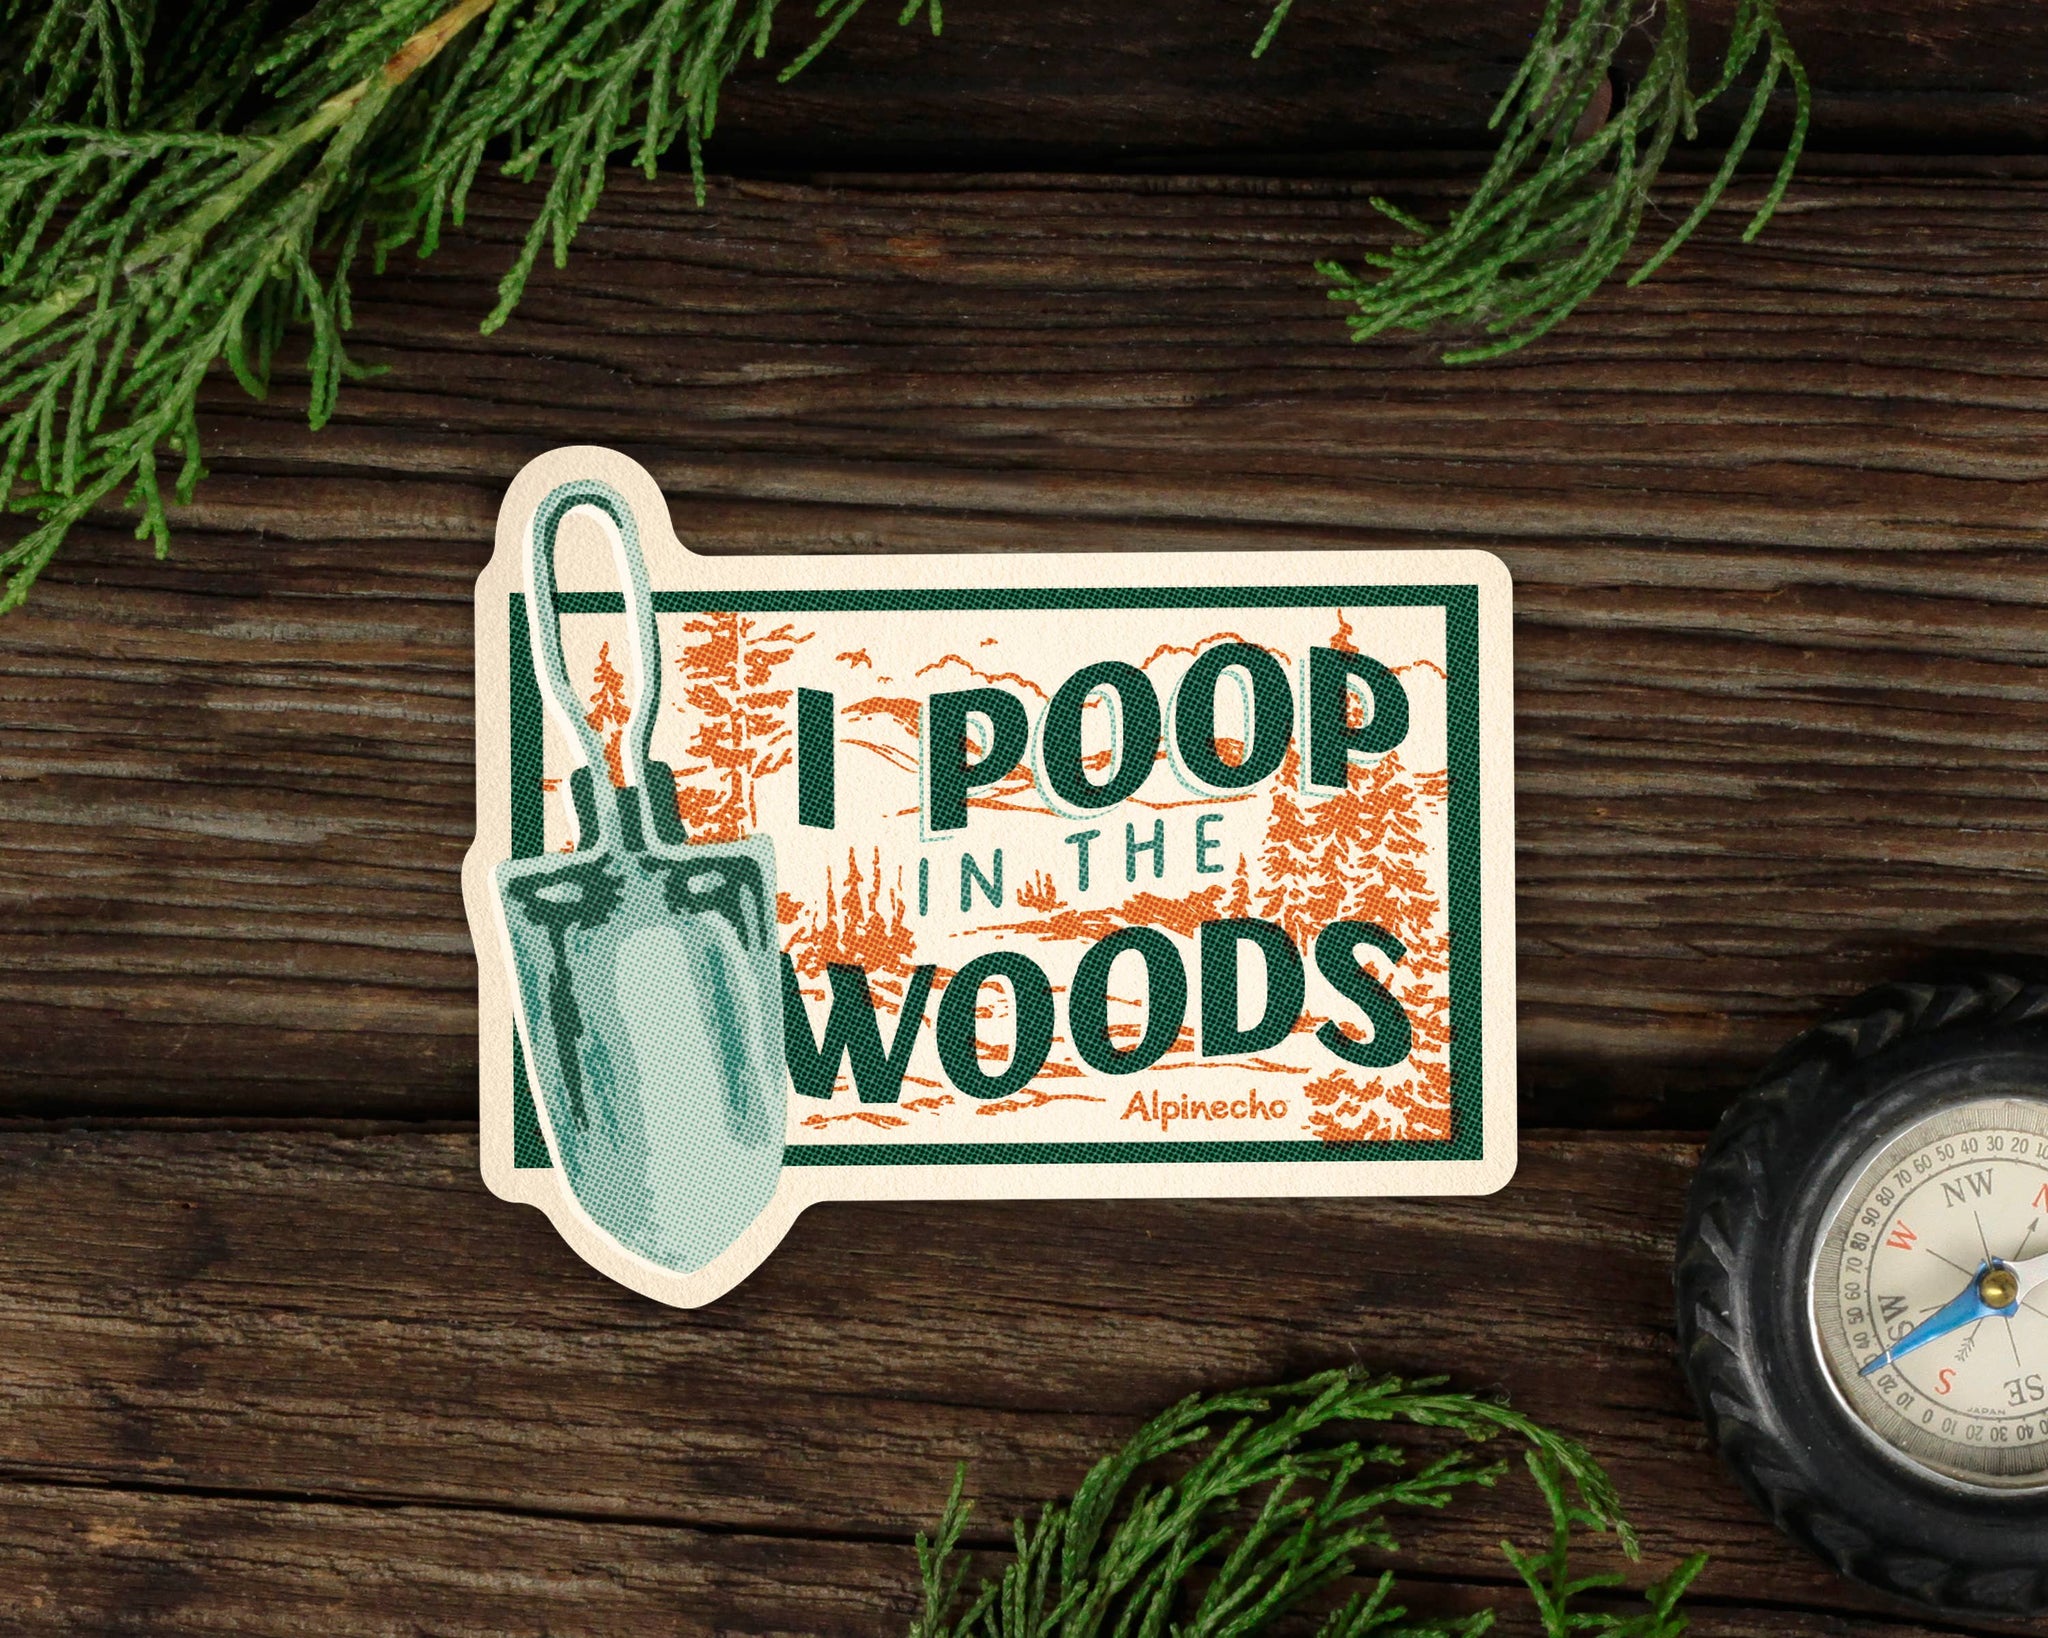 Alpinecho - I Poop in the Woods Sticker